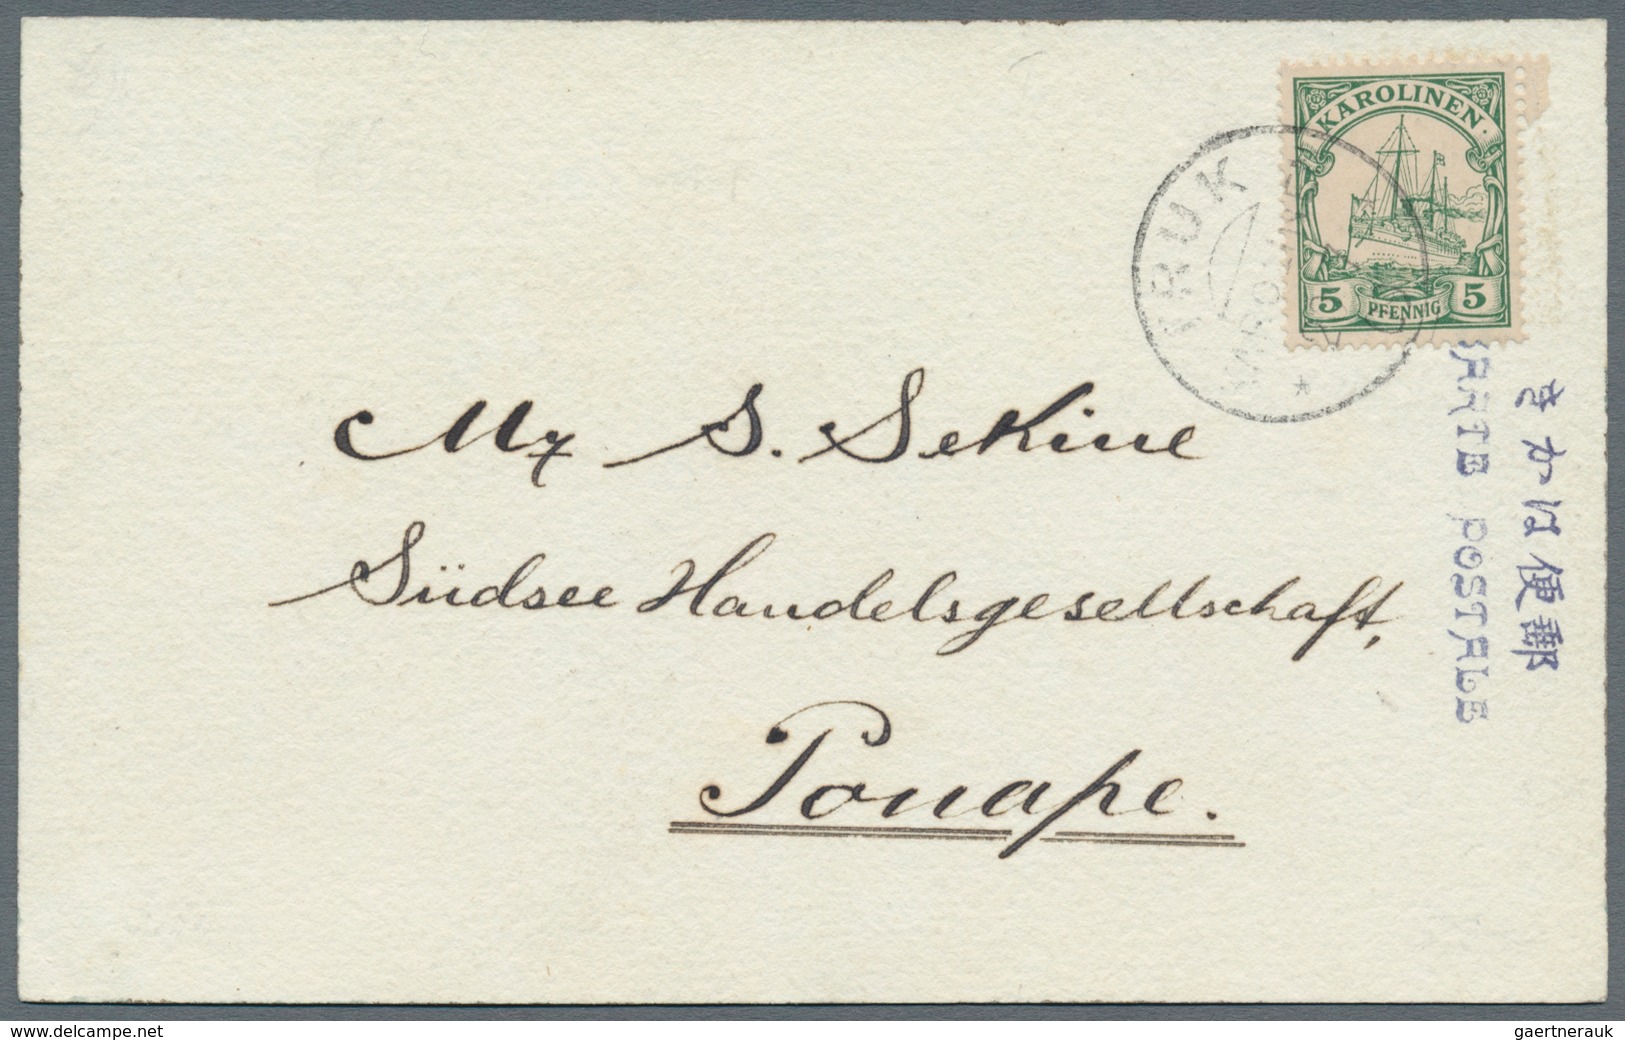 Deutsche Kolonien - Karolinen: 1900, 5 Pfg. Kaiseryacht Mit Stempel "TRUK KAROLINEN 20.7.09" Auf Far - Carolinen